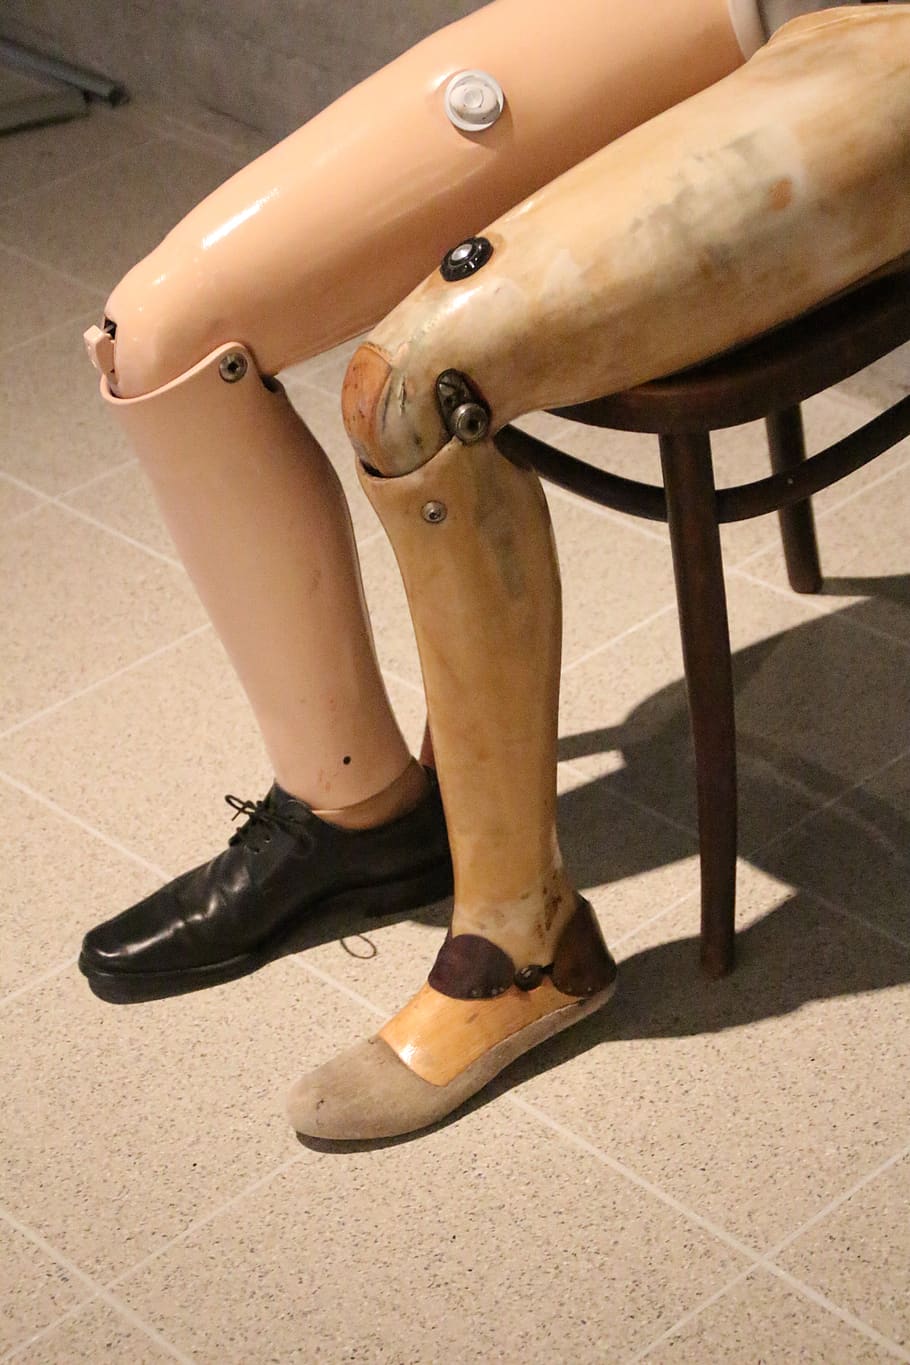 prosthetic, artificial limb, leg, false leg, medical, injury, limb, shoe, low section, human leg